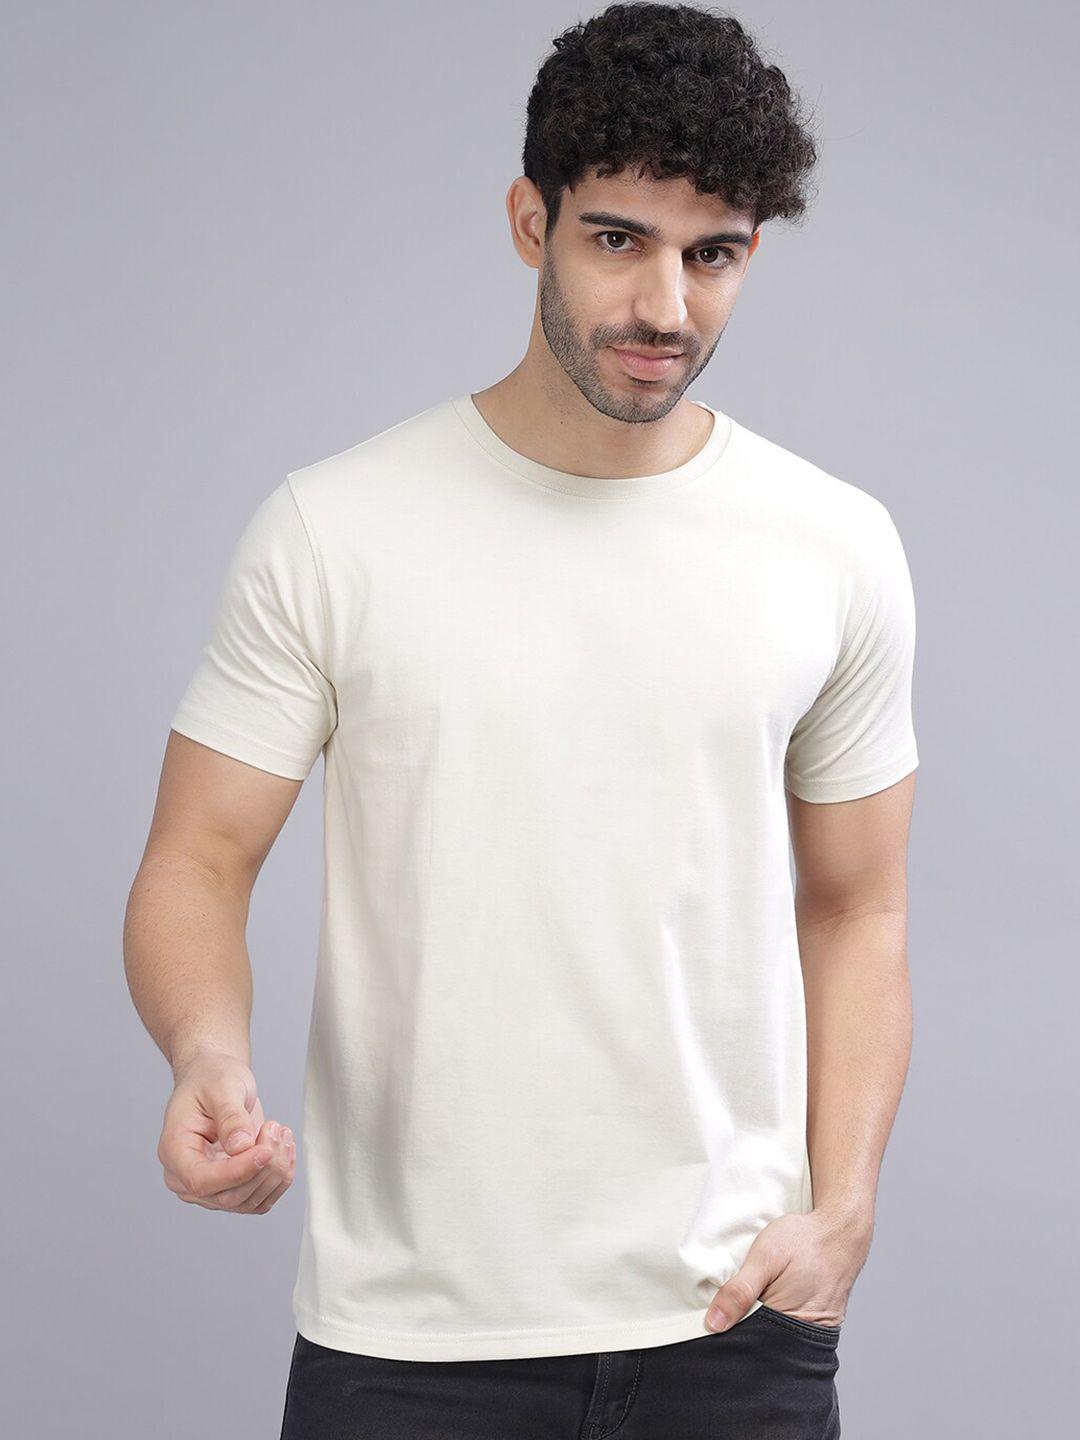 paul street round neck bio finish pure cotton slim fit sports t-shirt